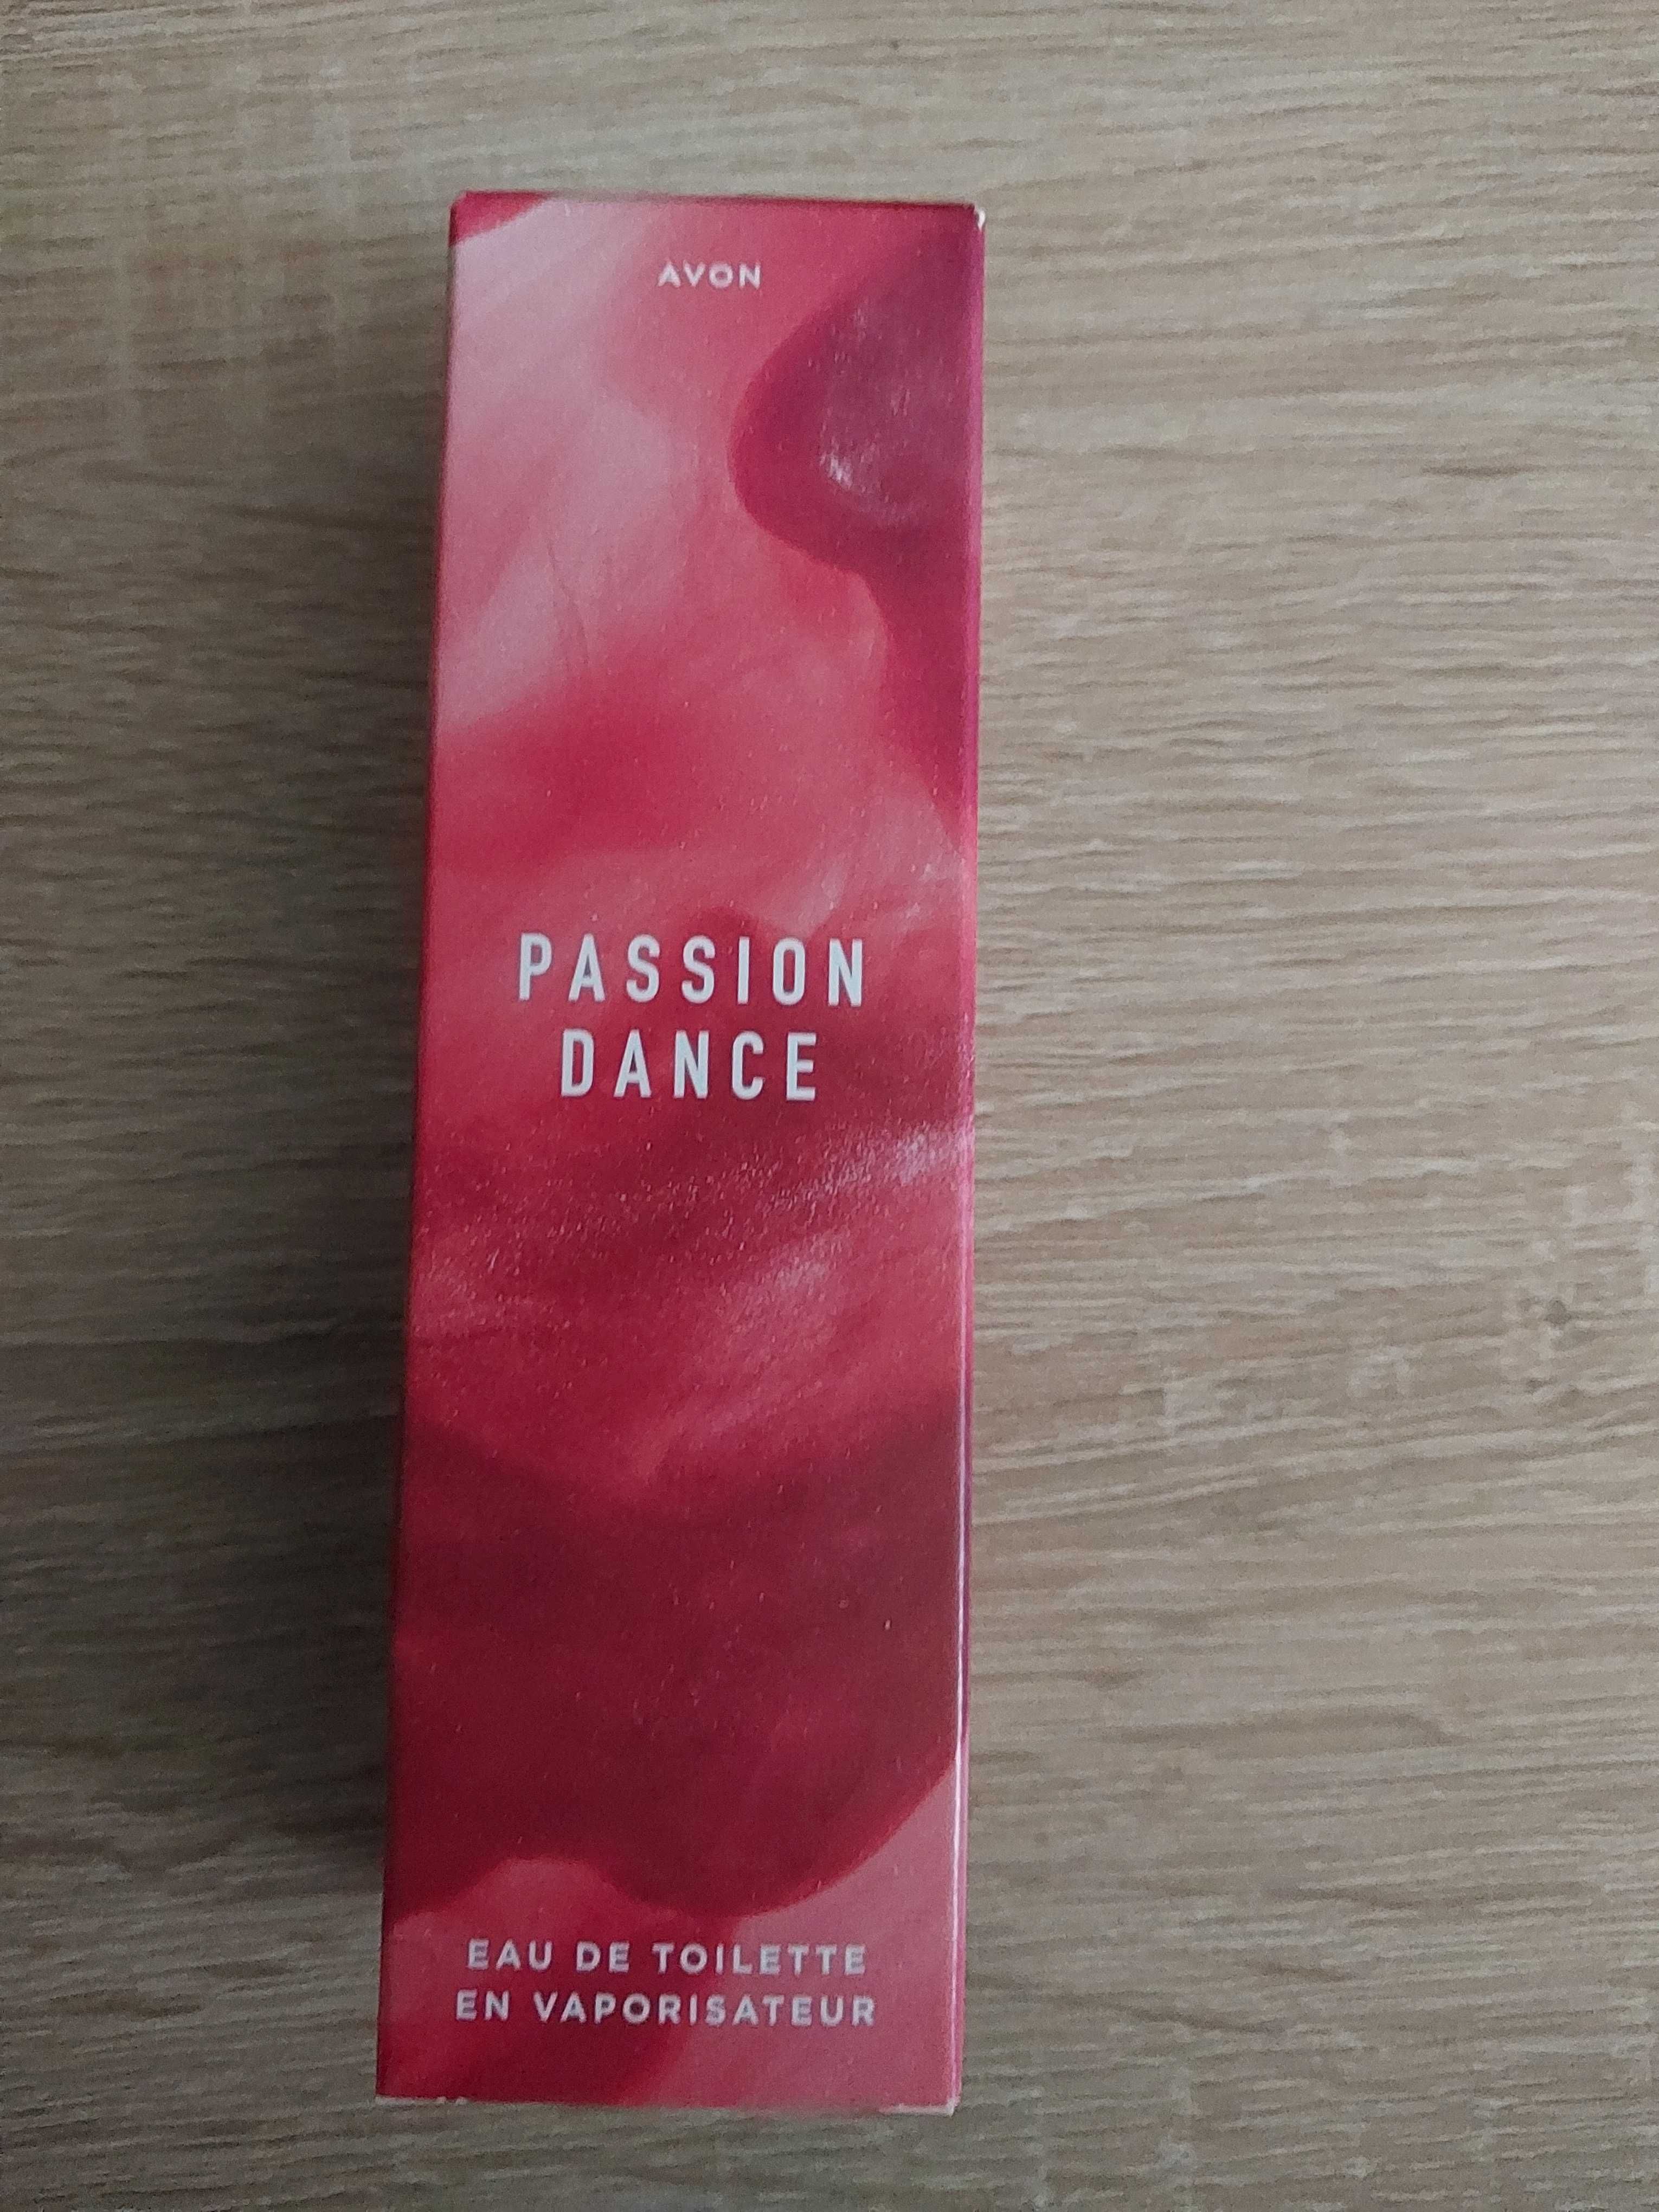 Passion dance 50ml